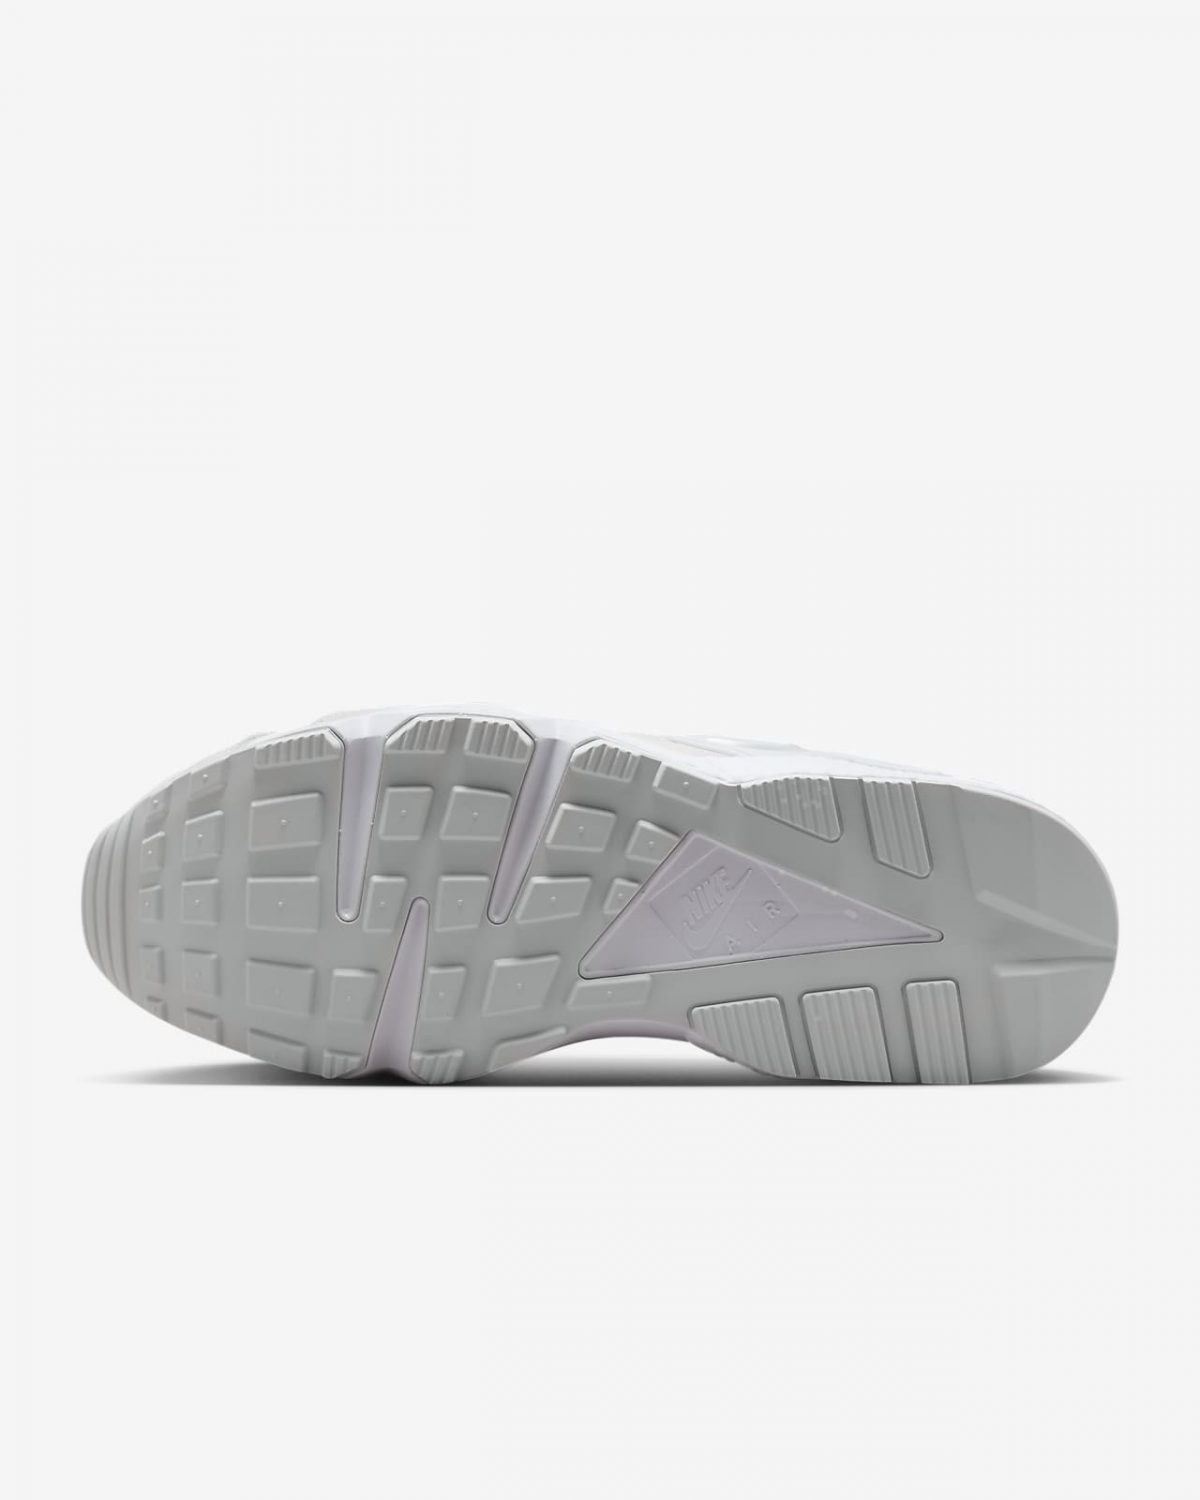 Мужские кроссовки Nike Air Huarache Runner белые фотография